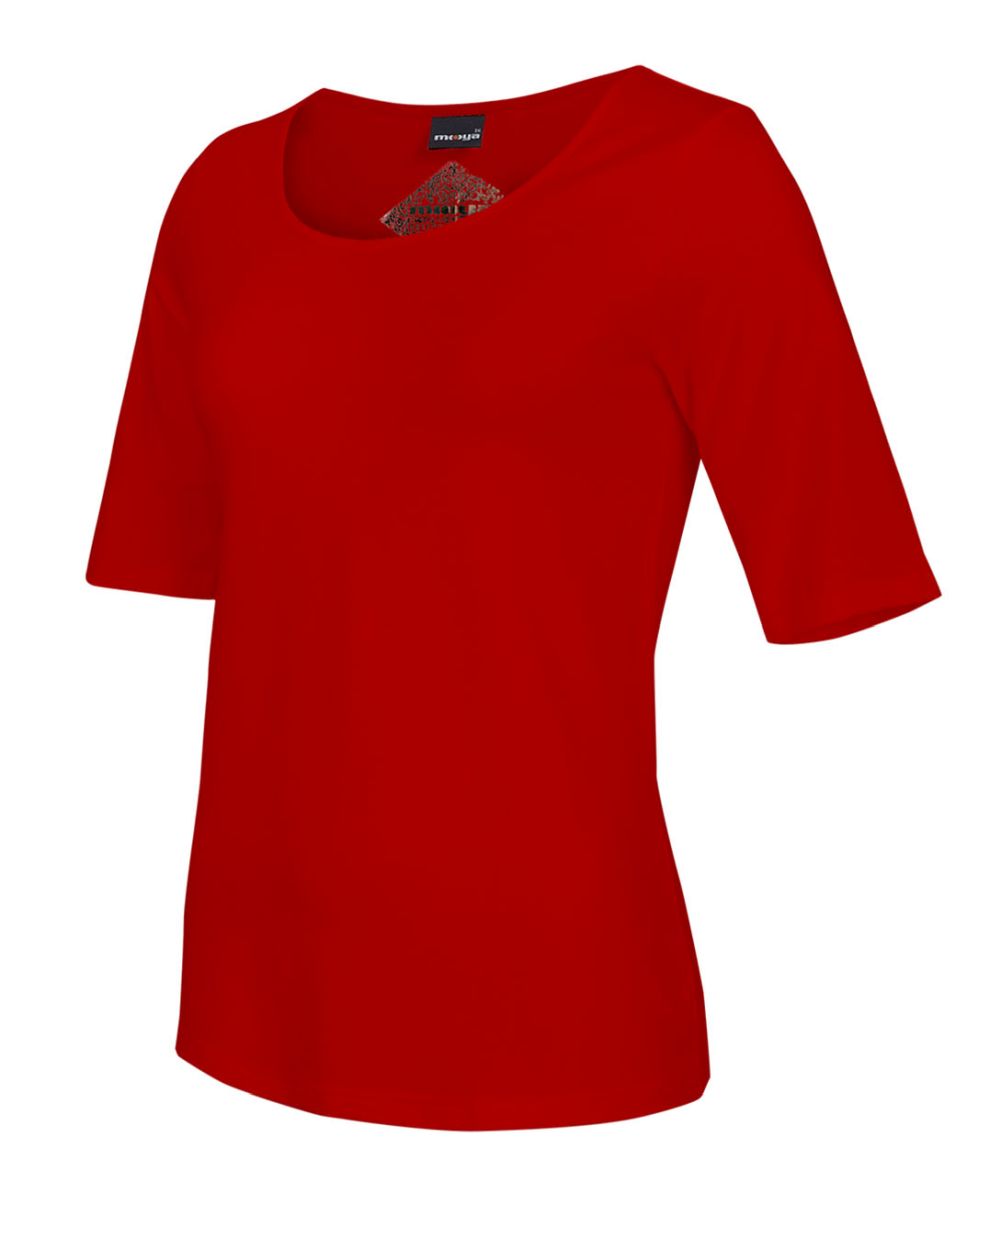 Damen-Viskose-Shirt Beatriz, 1/2-Arm, Farbe Red